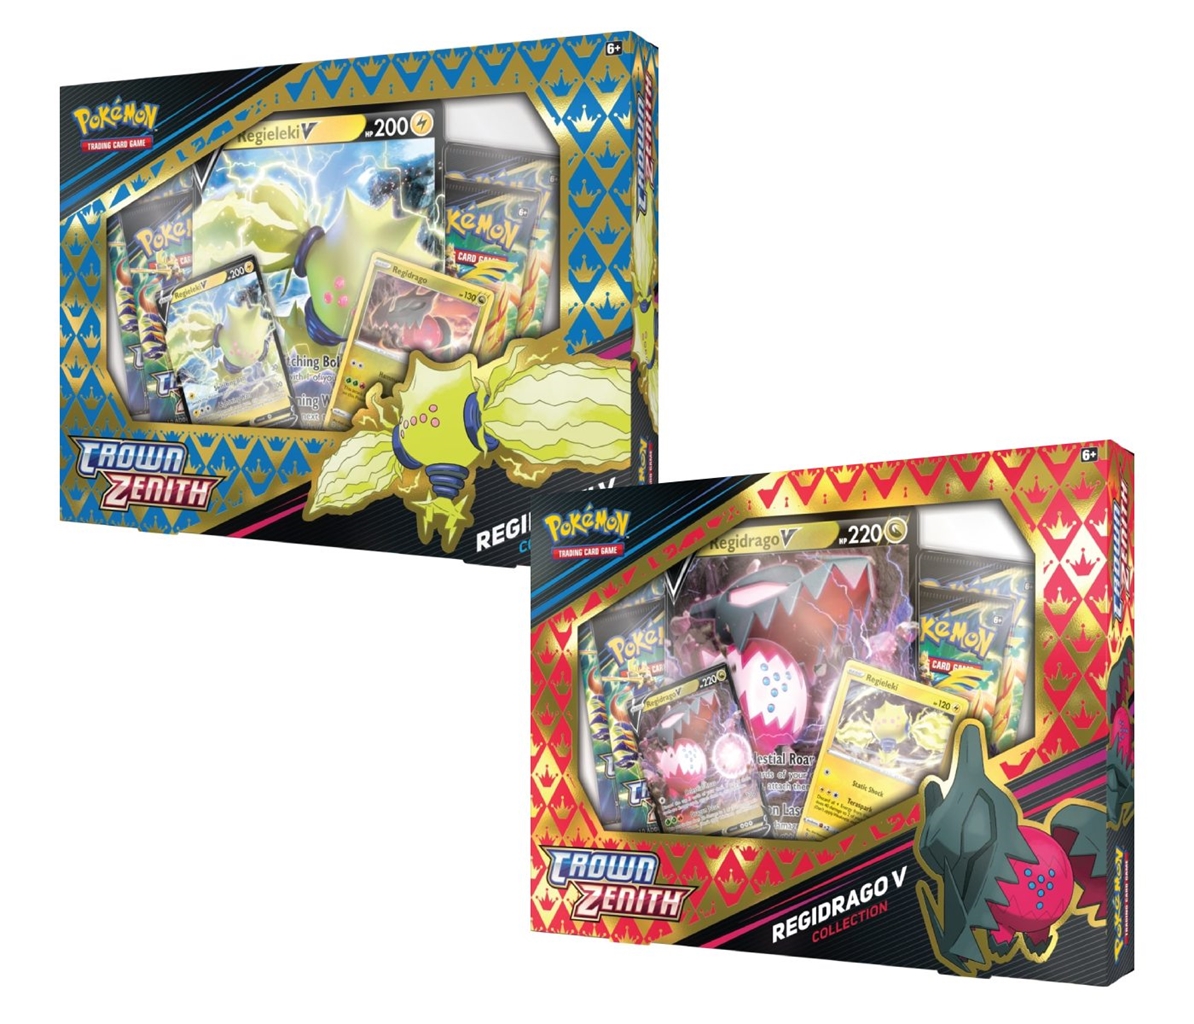 Pokémon TCG SWSH12.5 Crown Zenith - Regieleki/Regidrago V Box